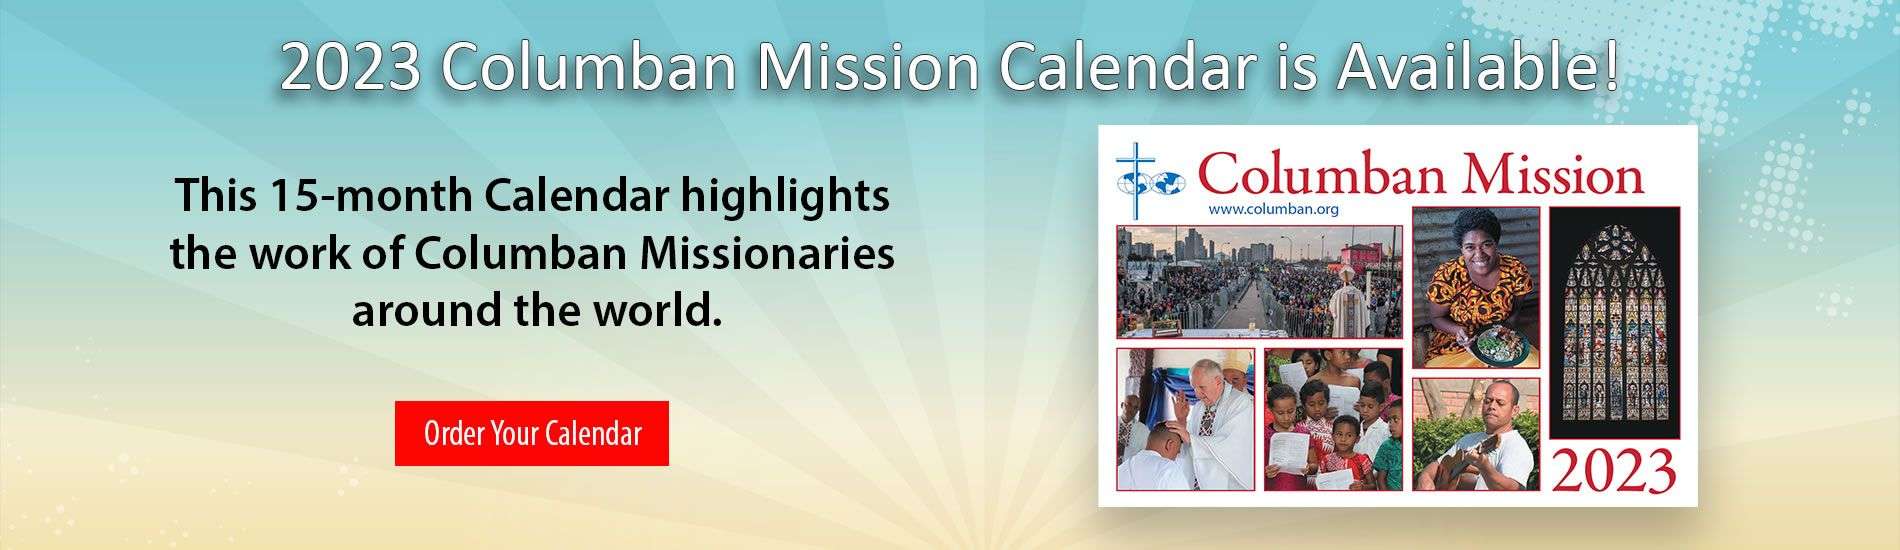 Order your 2023 Columban Mission Calendar